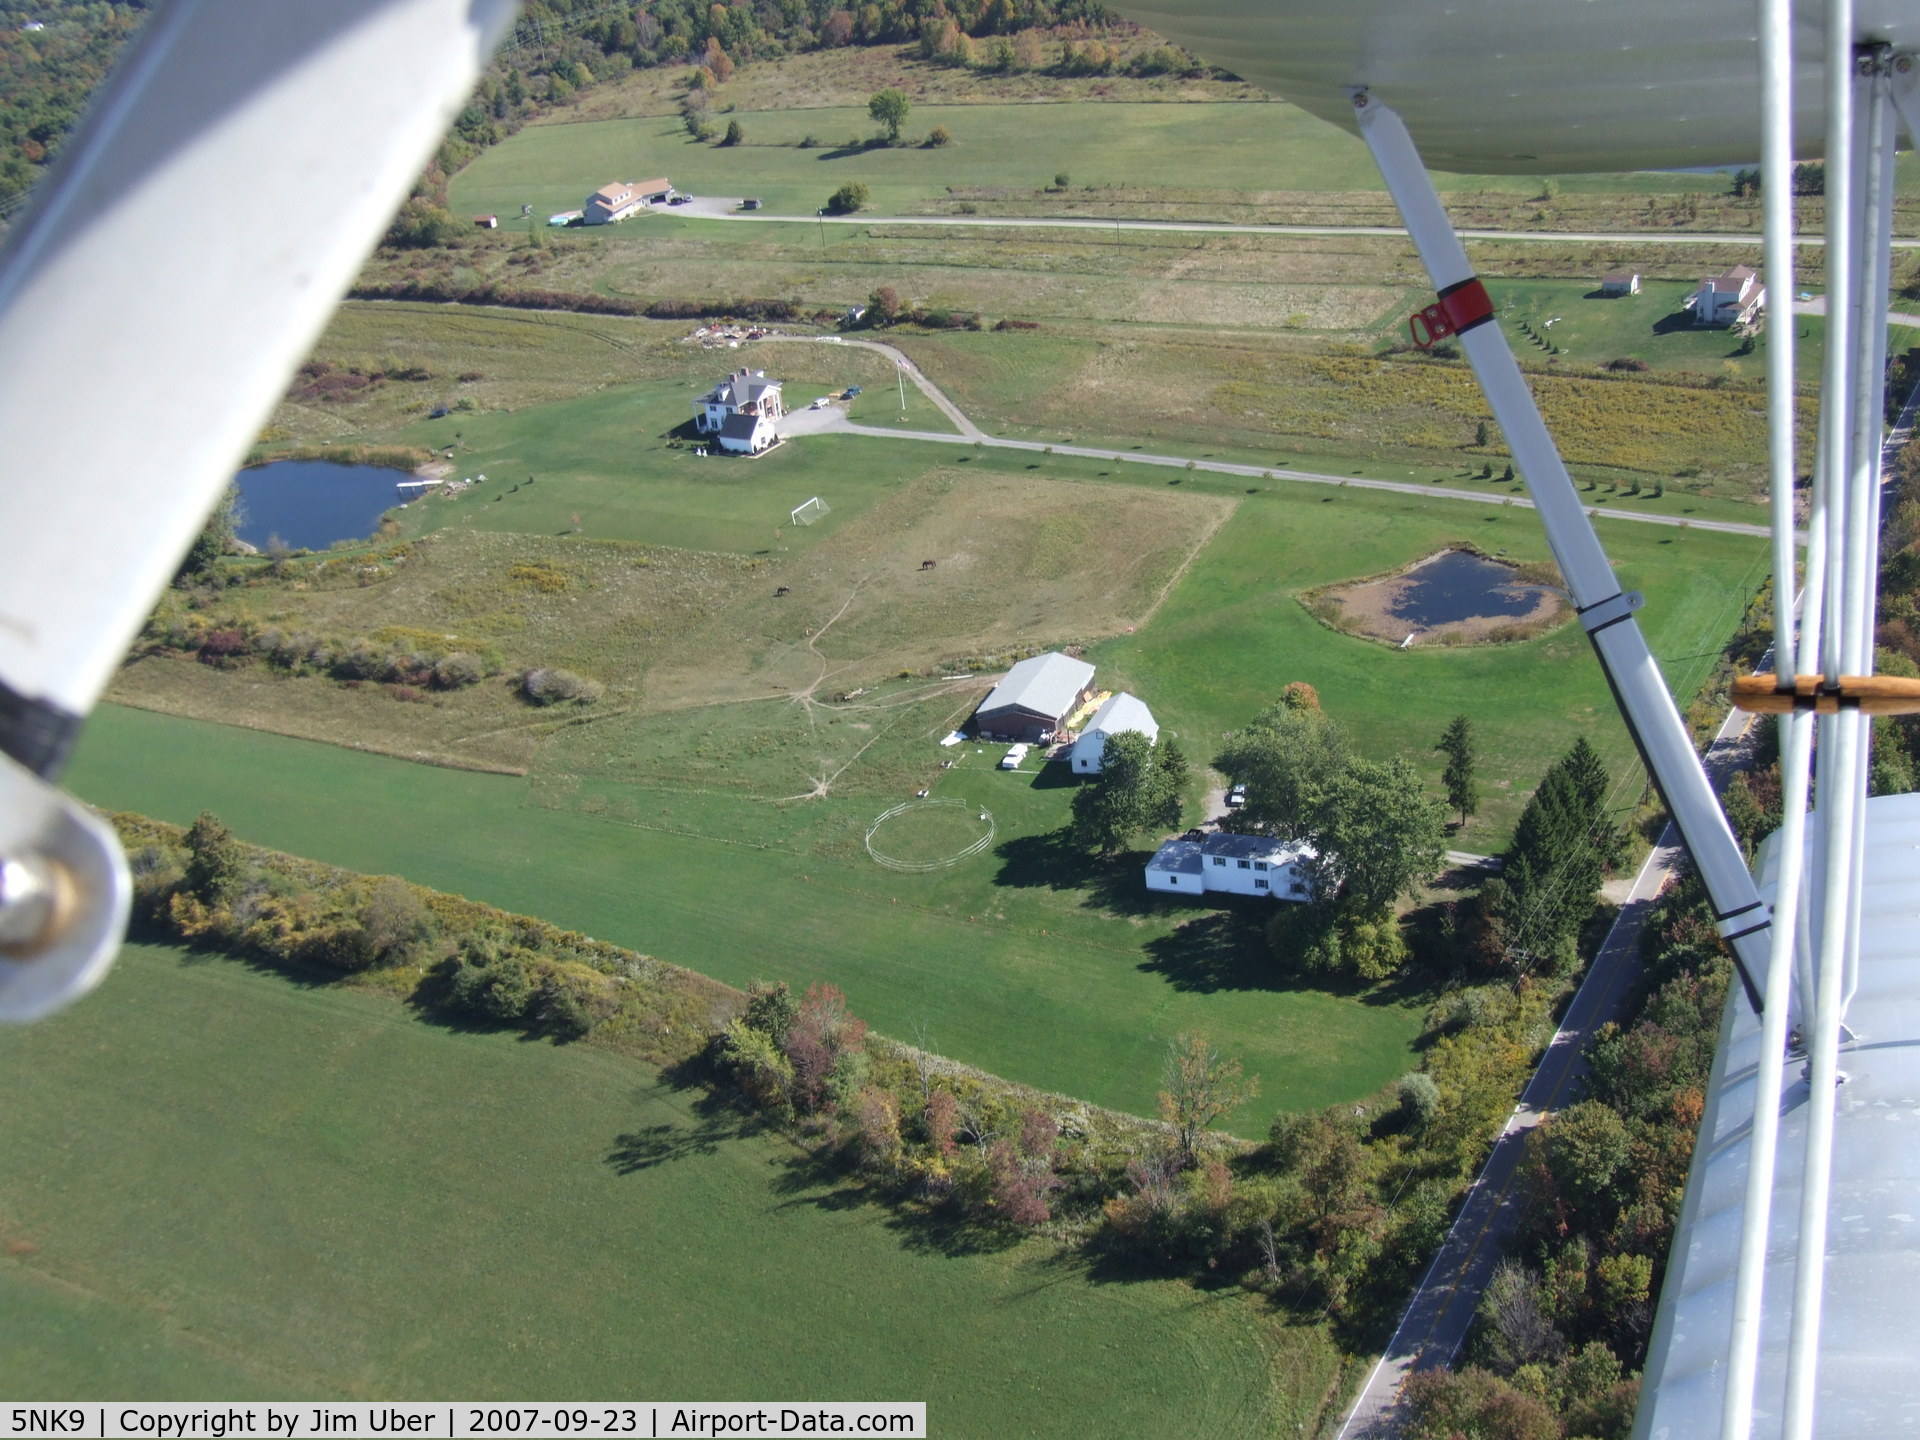 Treichler Farm Airport (5NK9) - Pete's home strip (pete's at the controls of the Fleet photo plane N8600)